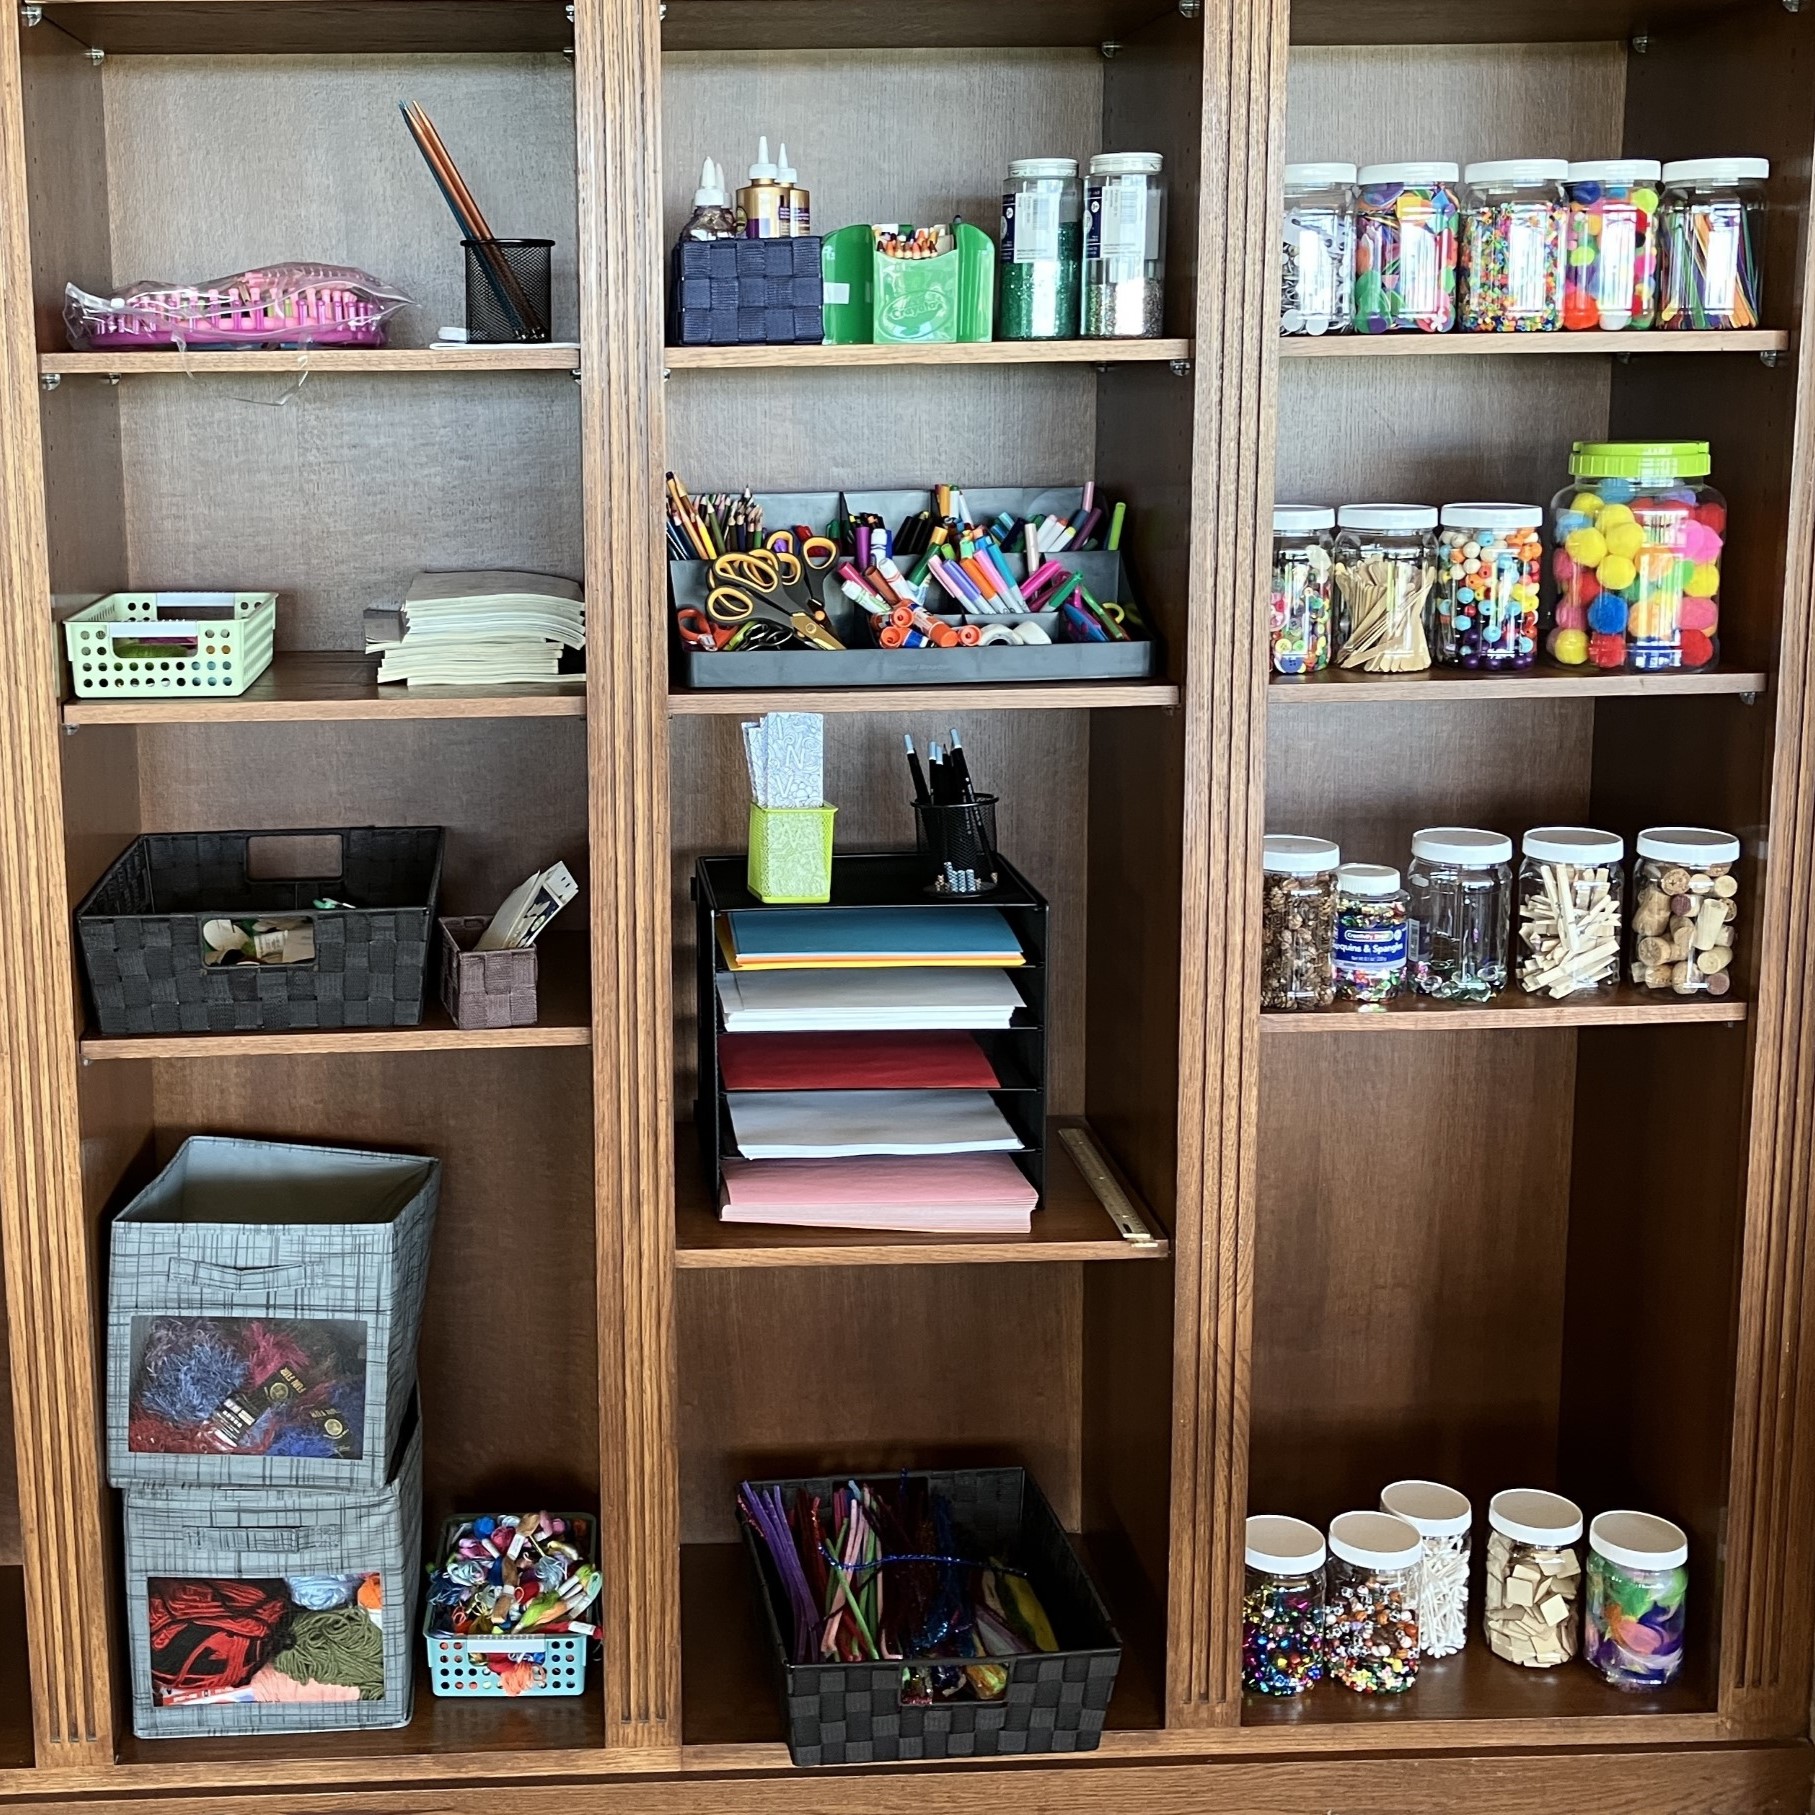 Shelves in MakerStudio with various craft supplies